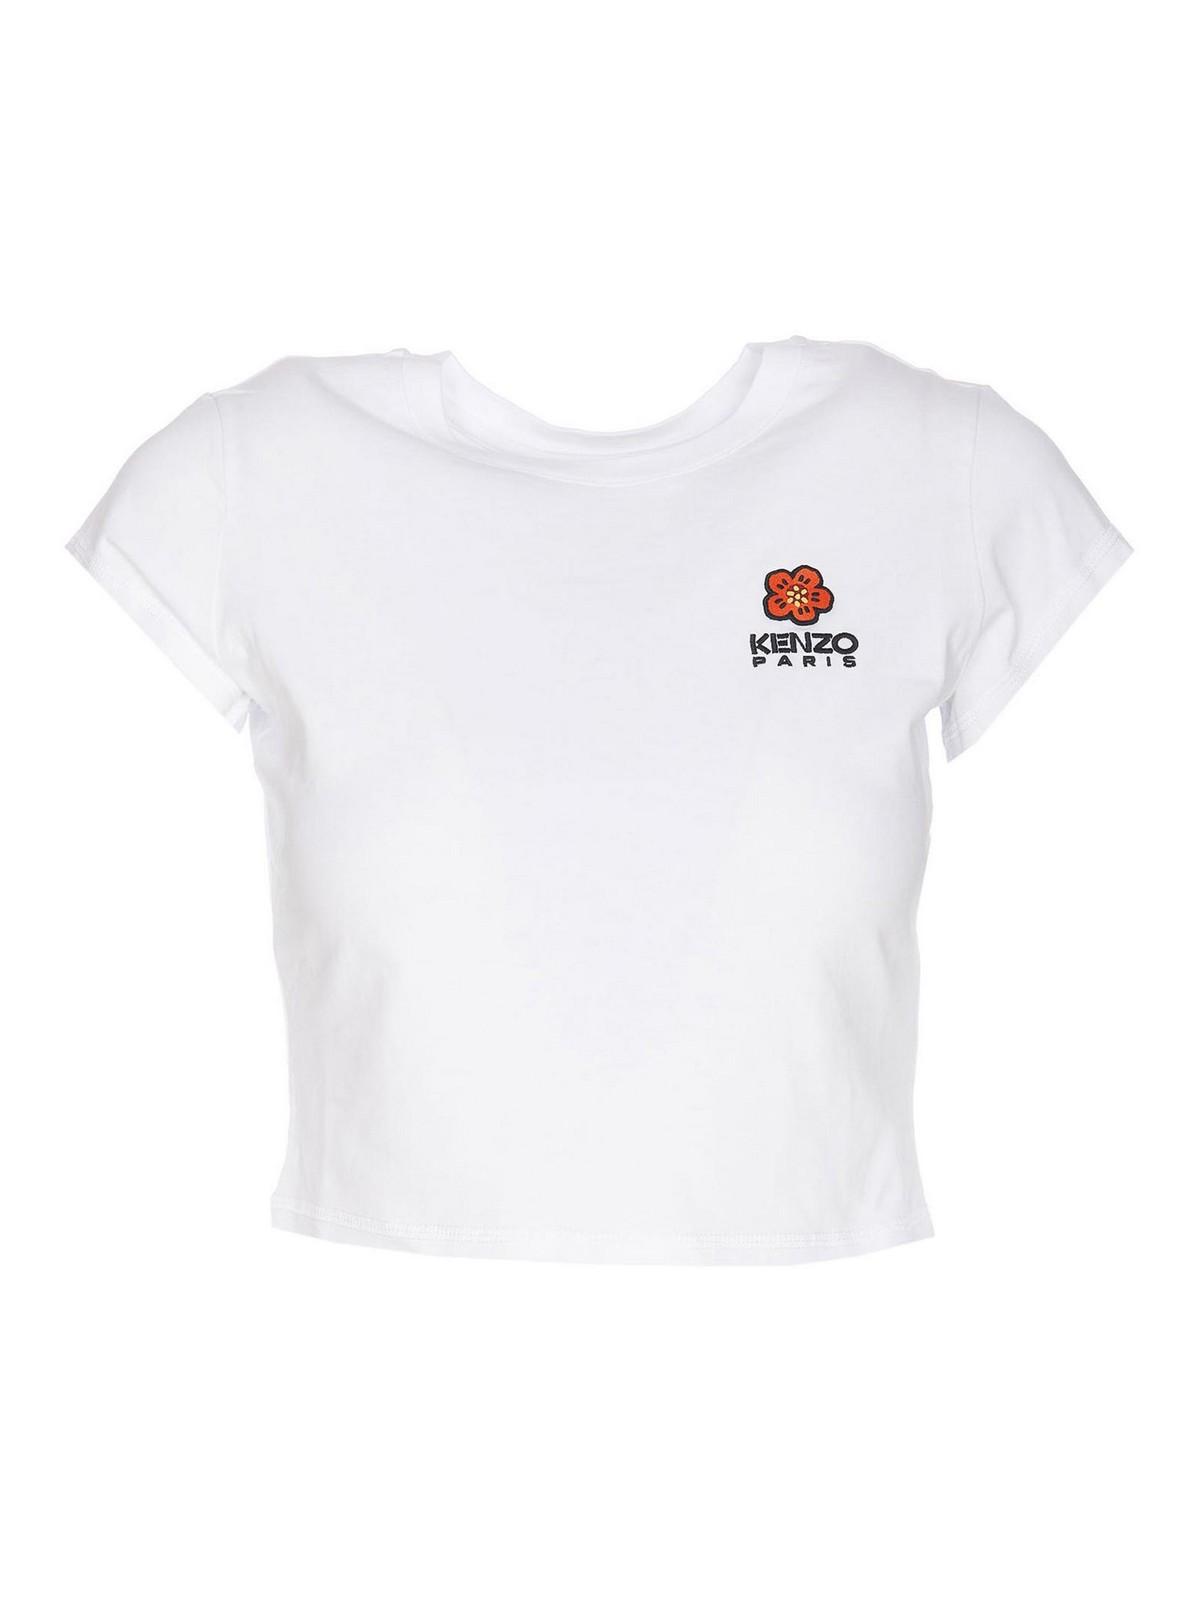 Kenzo Boke Crest Baby T-shirt In White